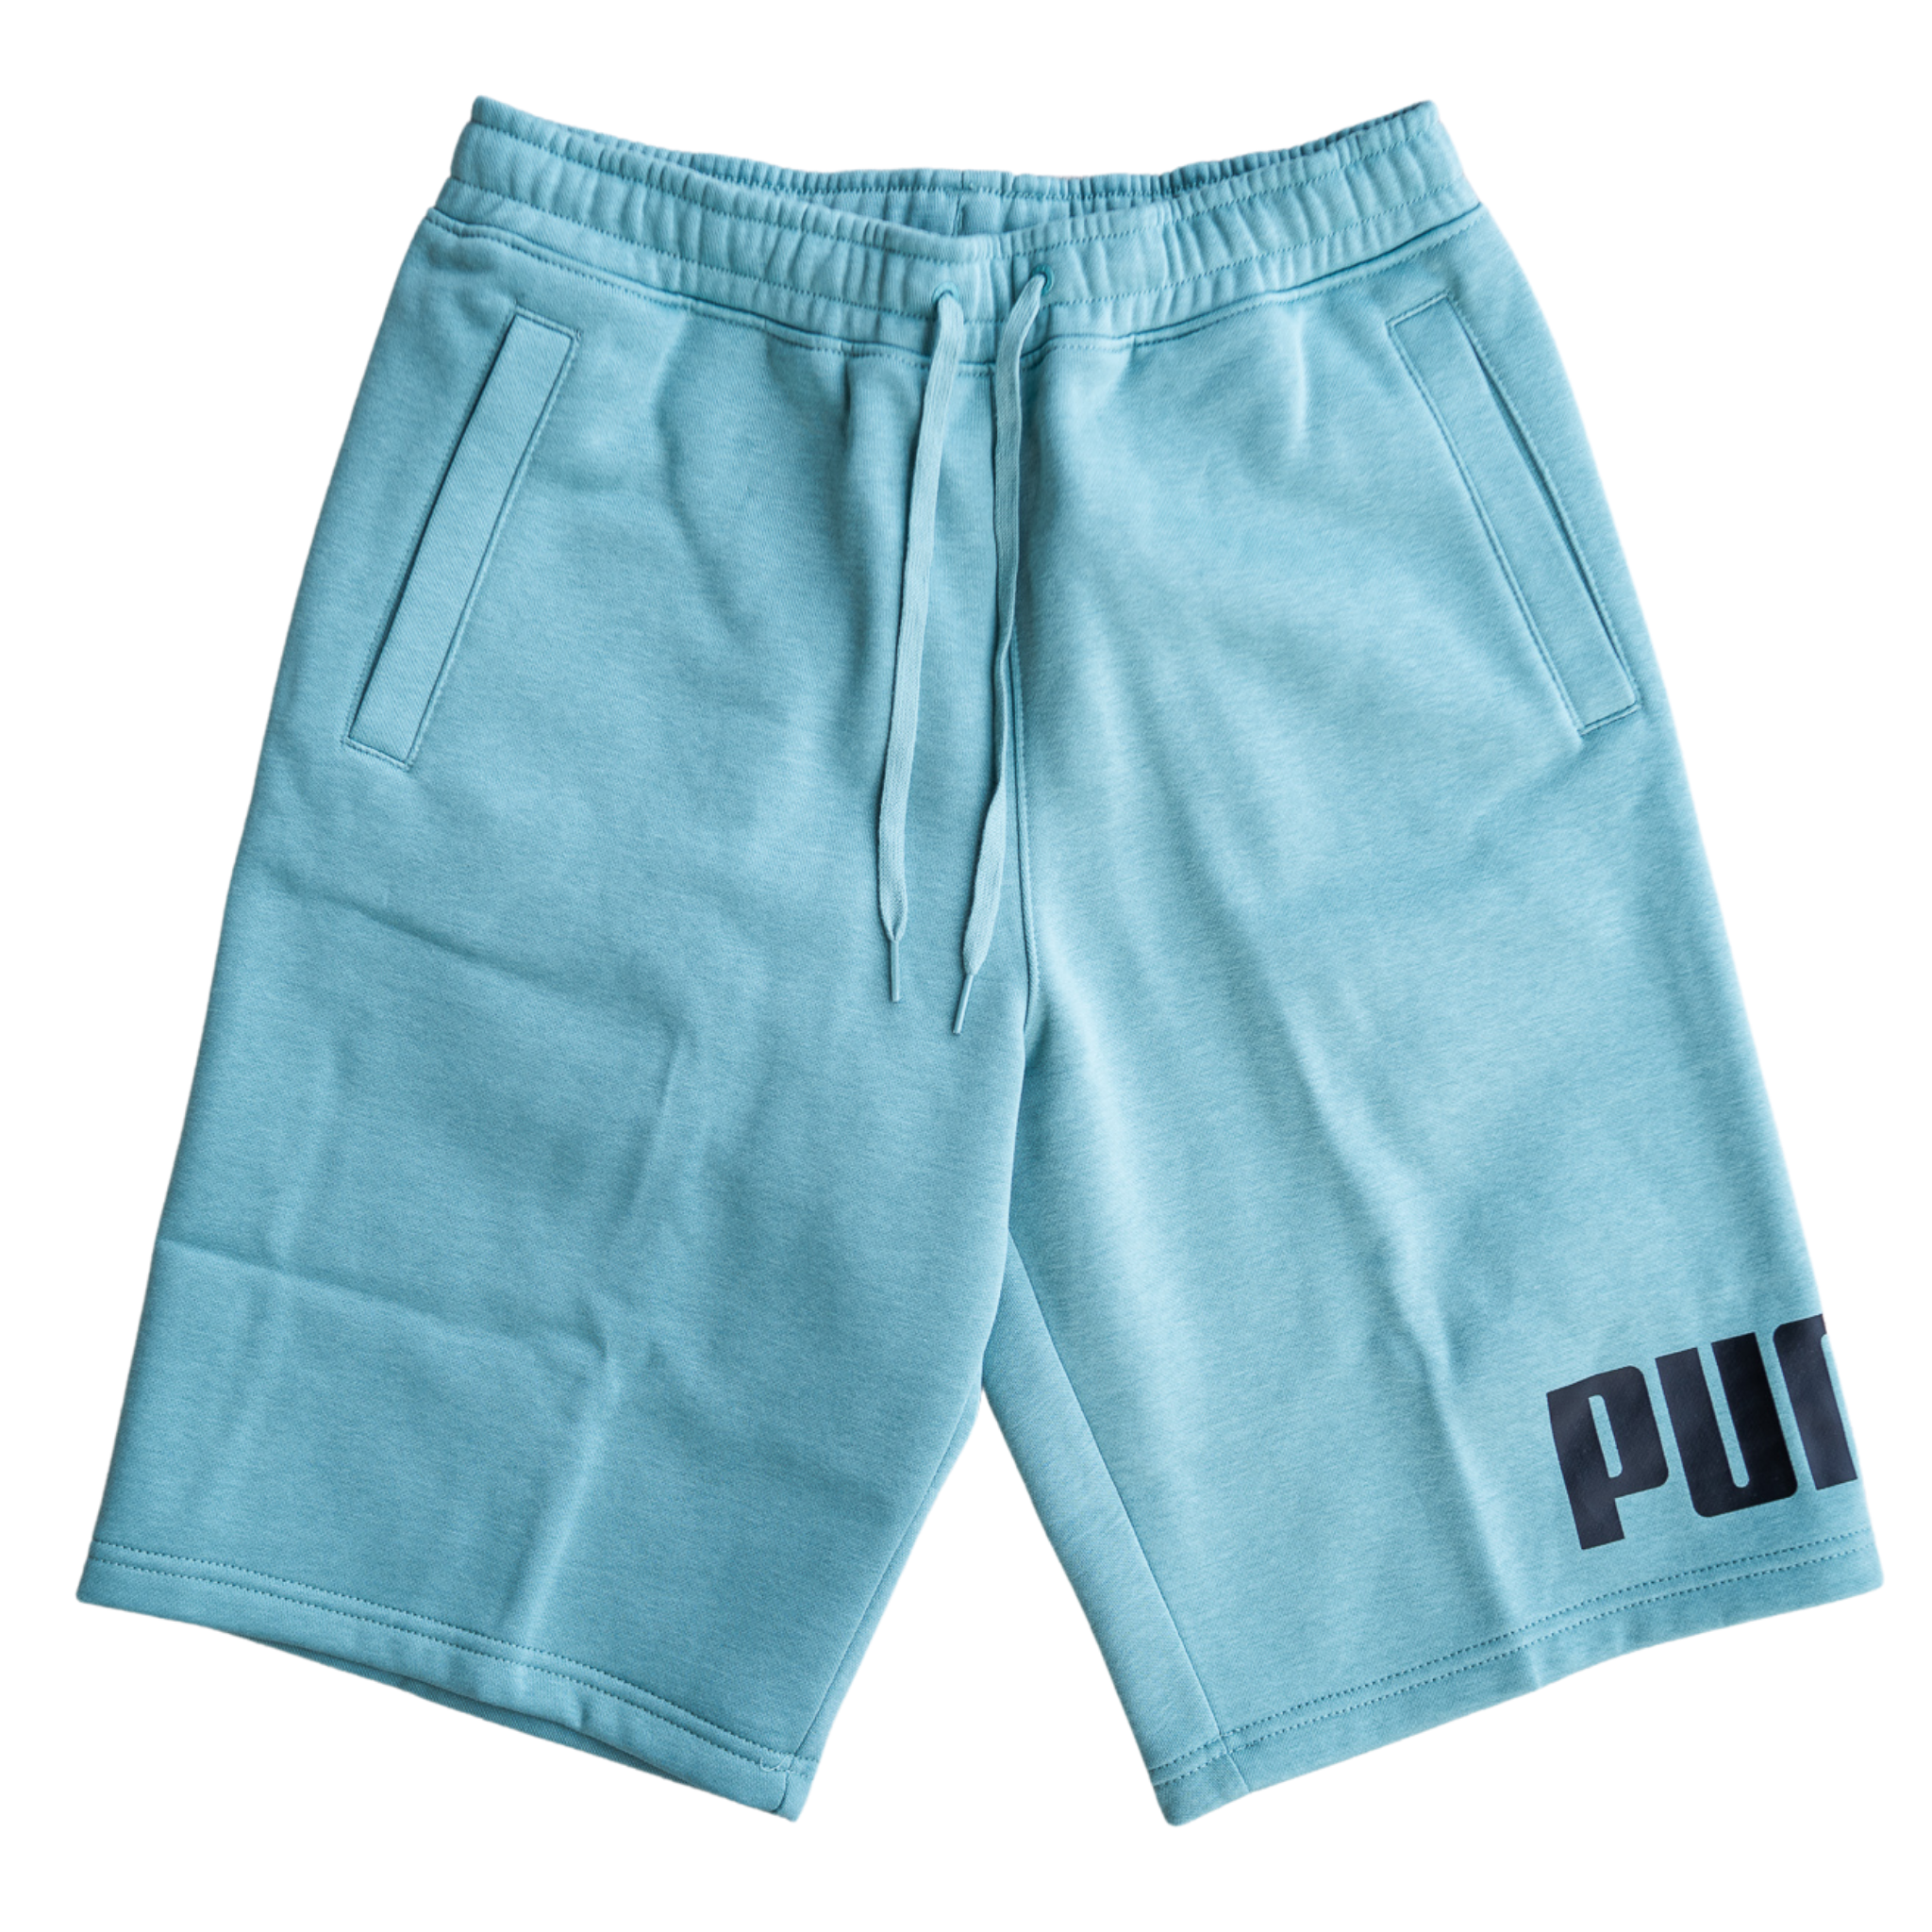 Puma Fleece Big 10' Shorts (Seafoam) - Puma